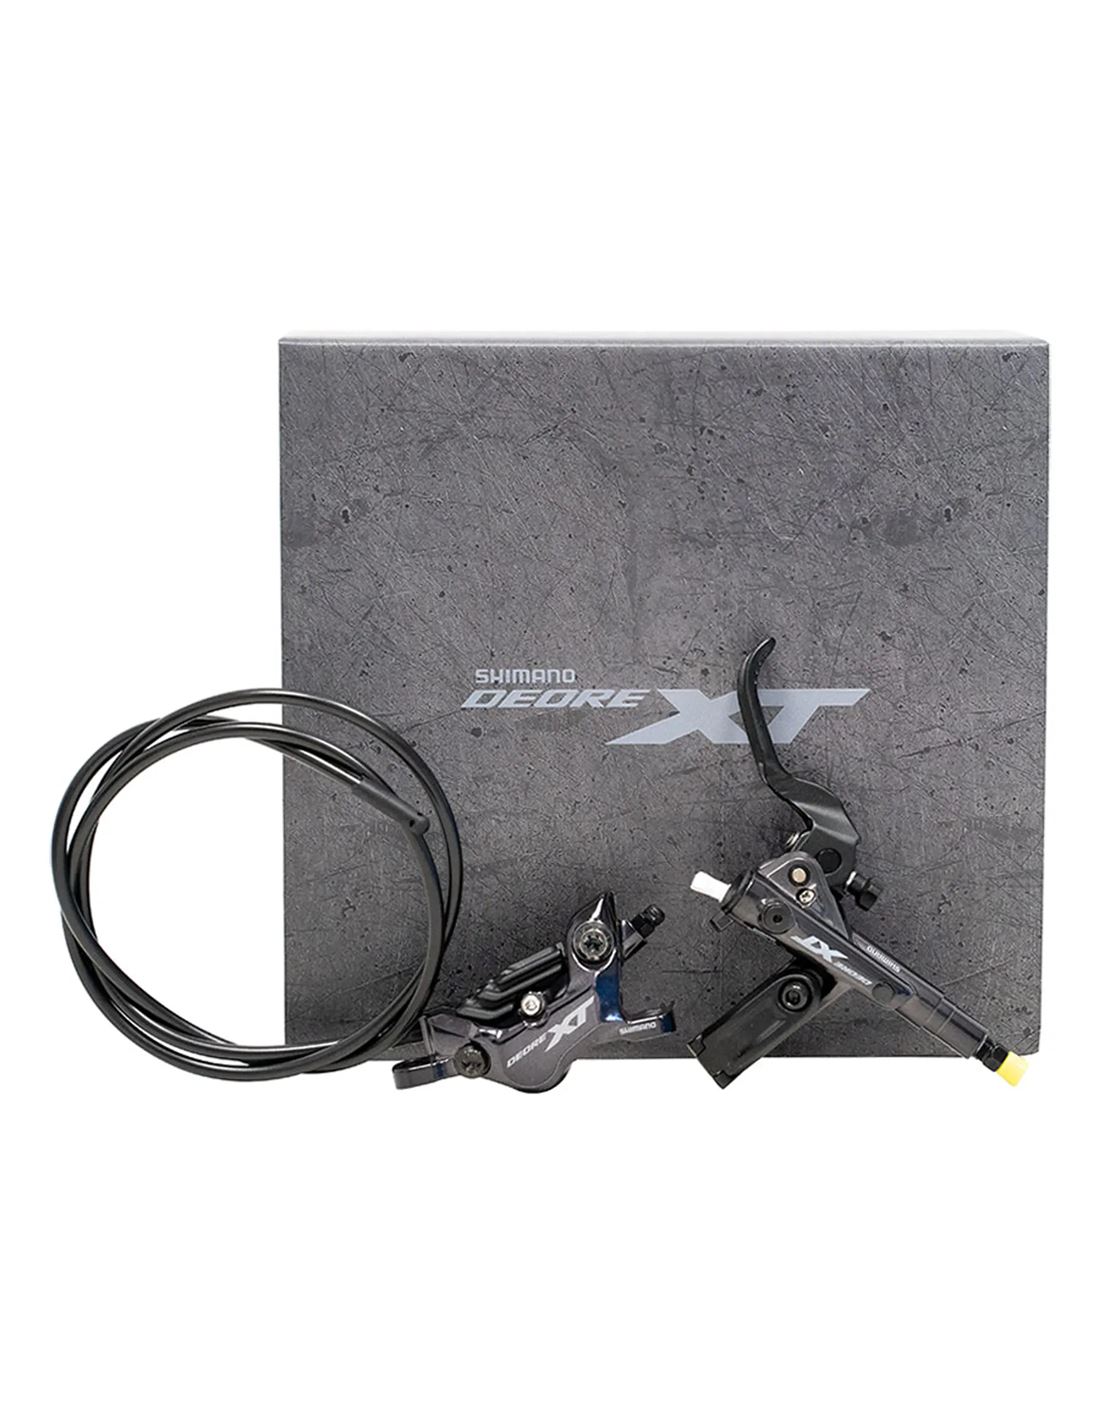 Kit Freno Disco Shimano XT M8100 Completo REF: IM8100JLFPRA100 - EAN13:  4550170445881 - Cicloscorredor - Tienda online - Comprar